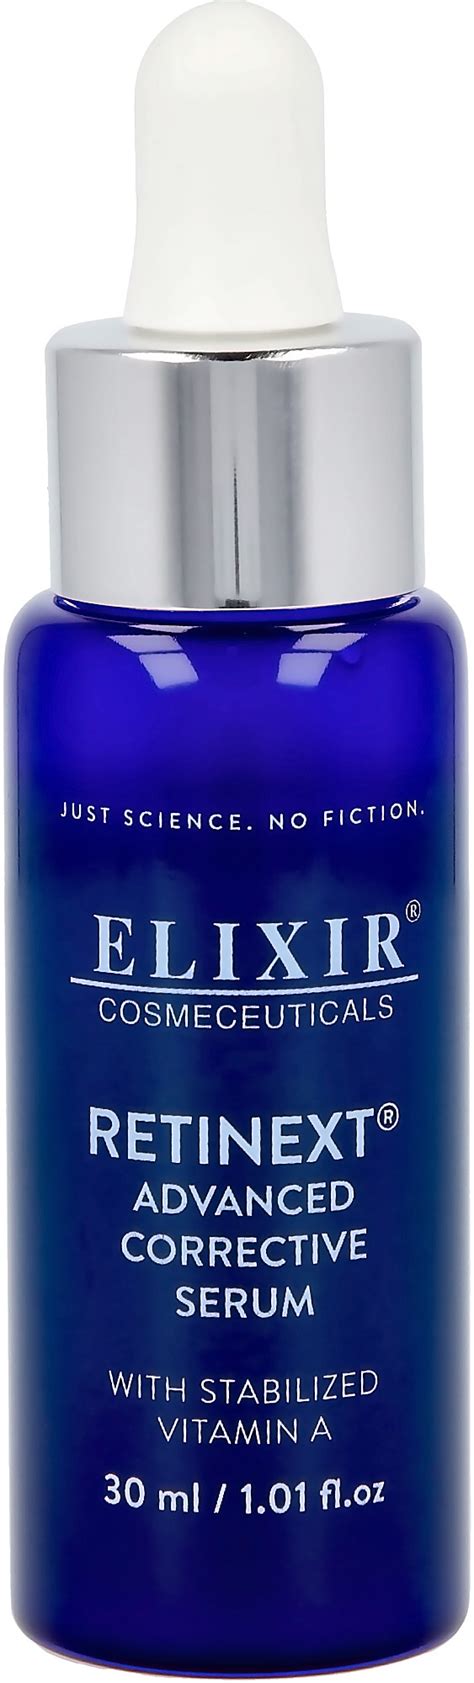 Elixir Cosmeceuticals Retinext Advanced Corrective Serum Ingredients